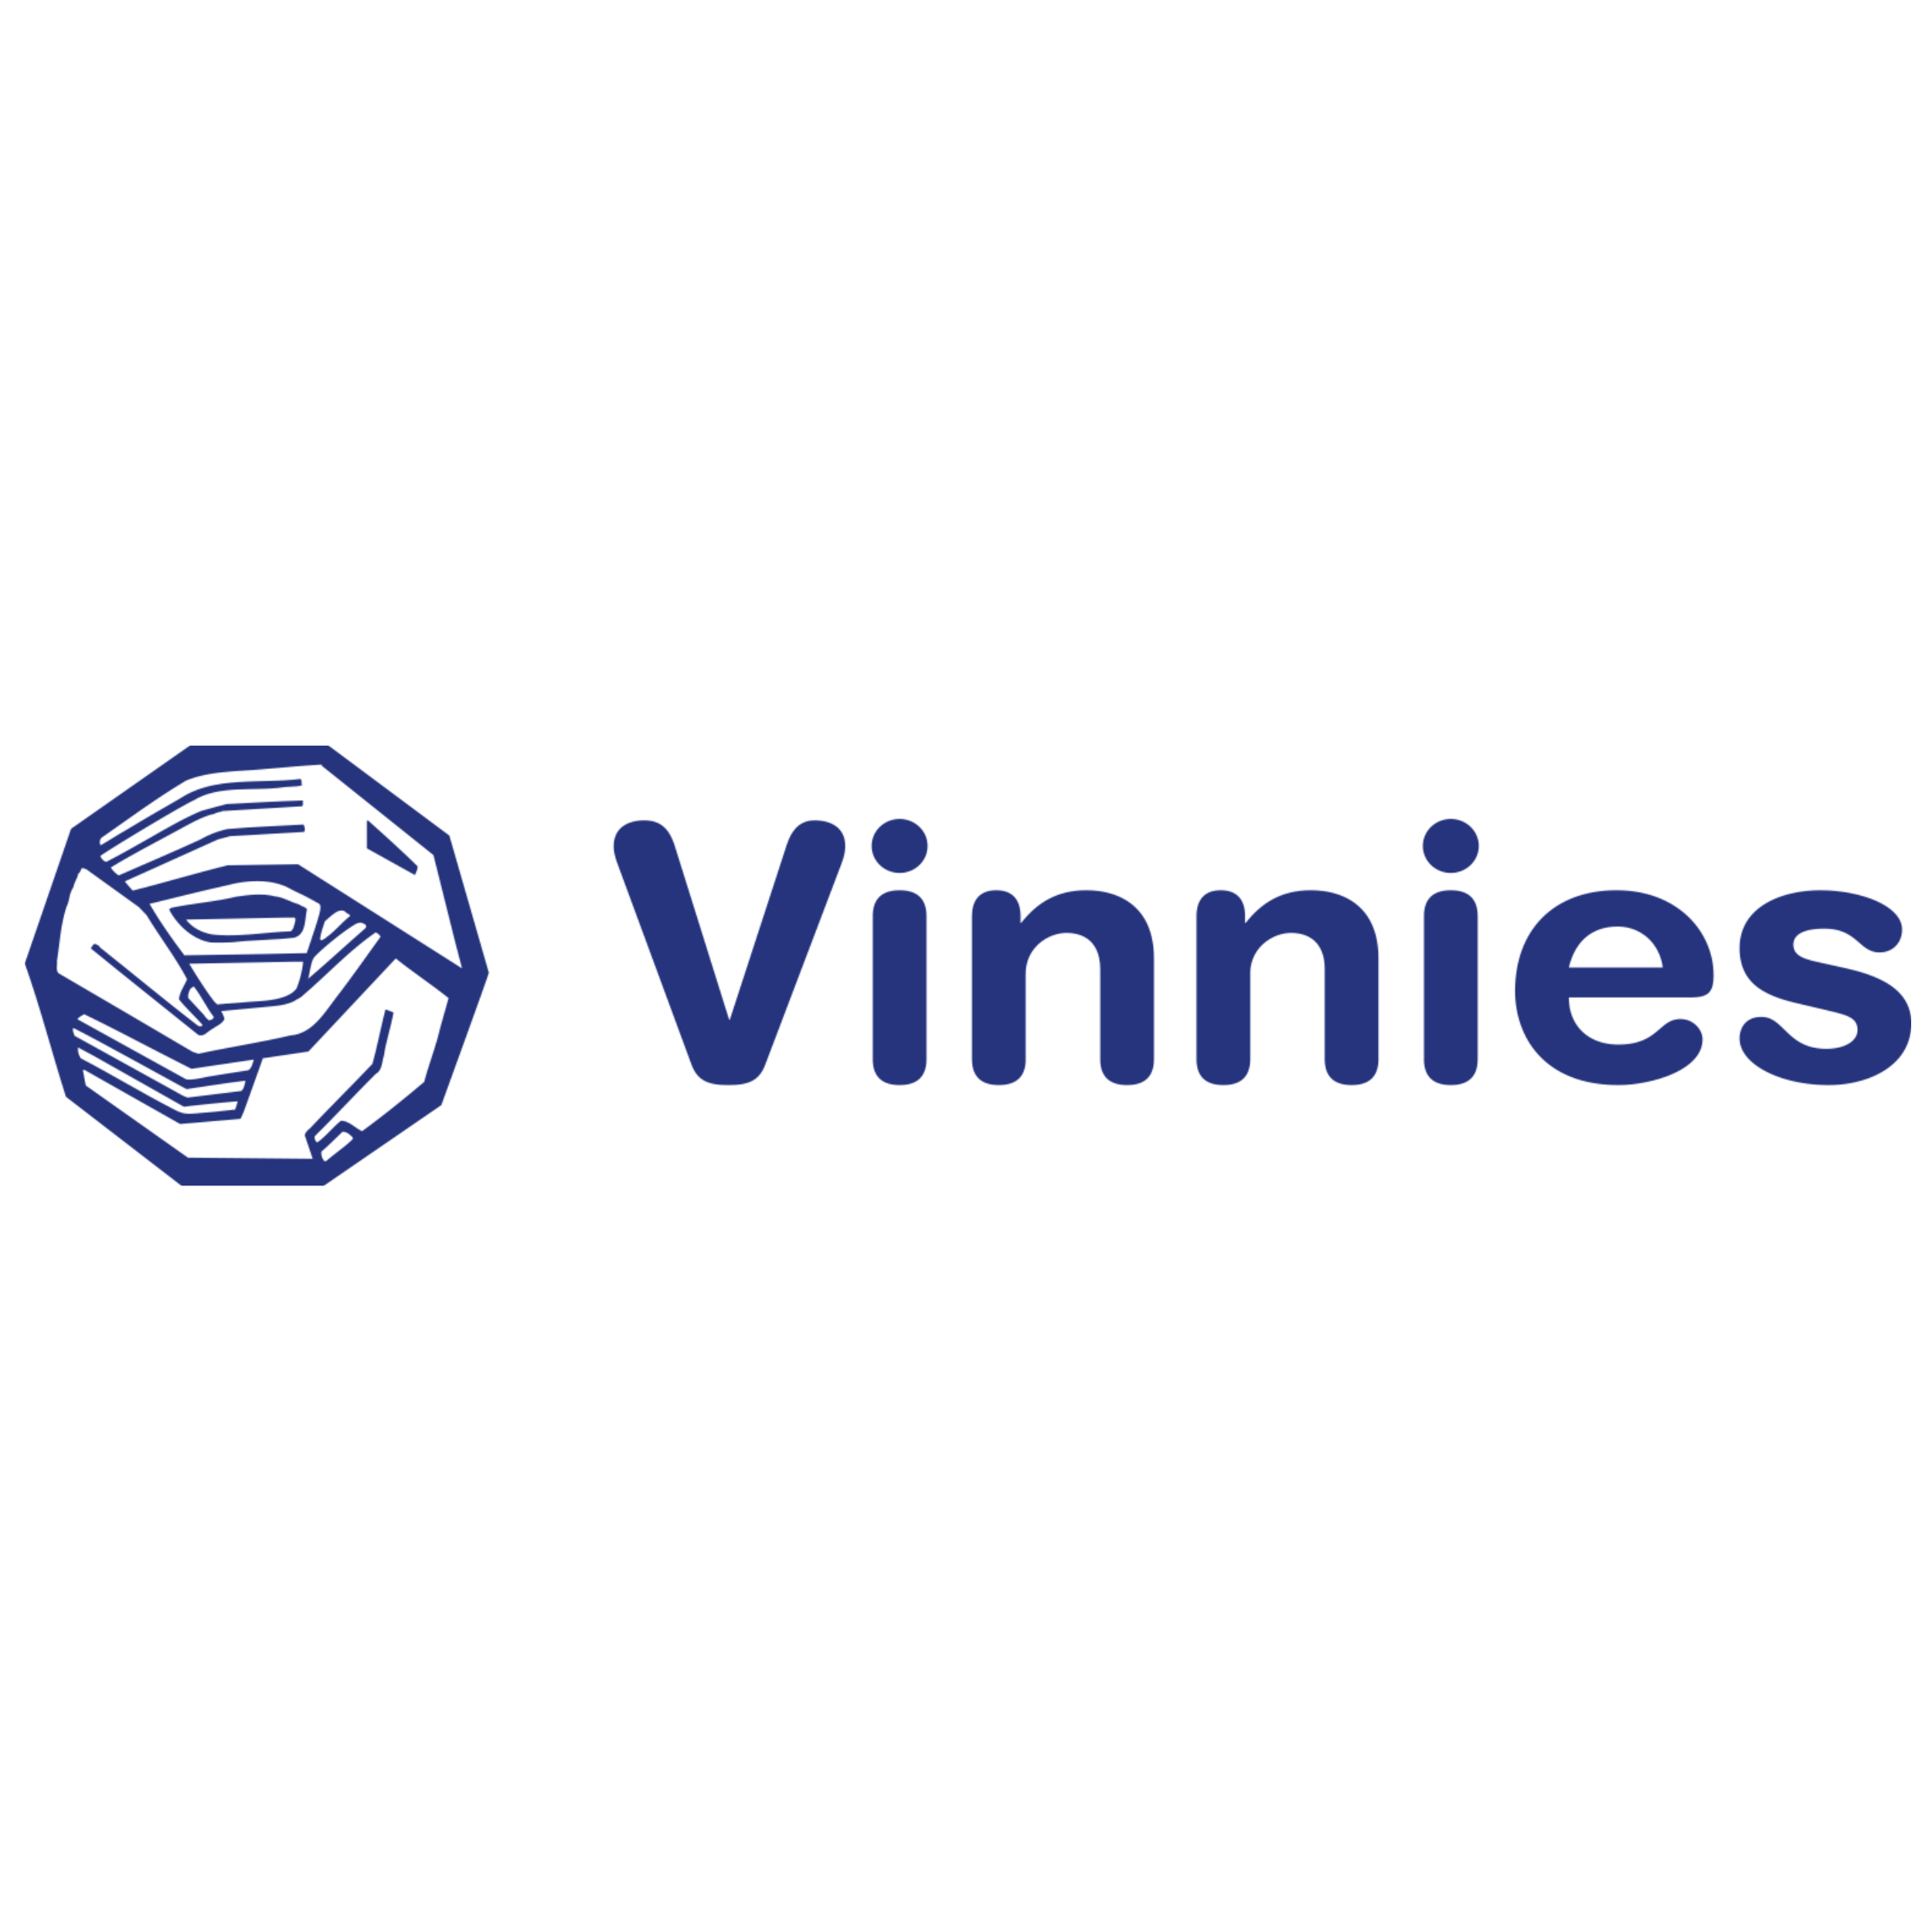 Vinnies : Brand Short Description Type Here.